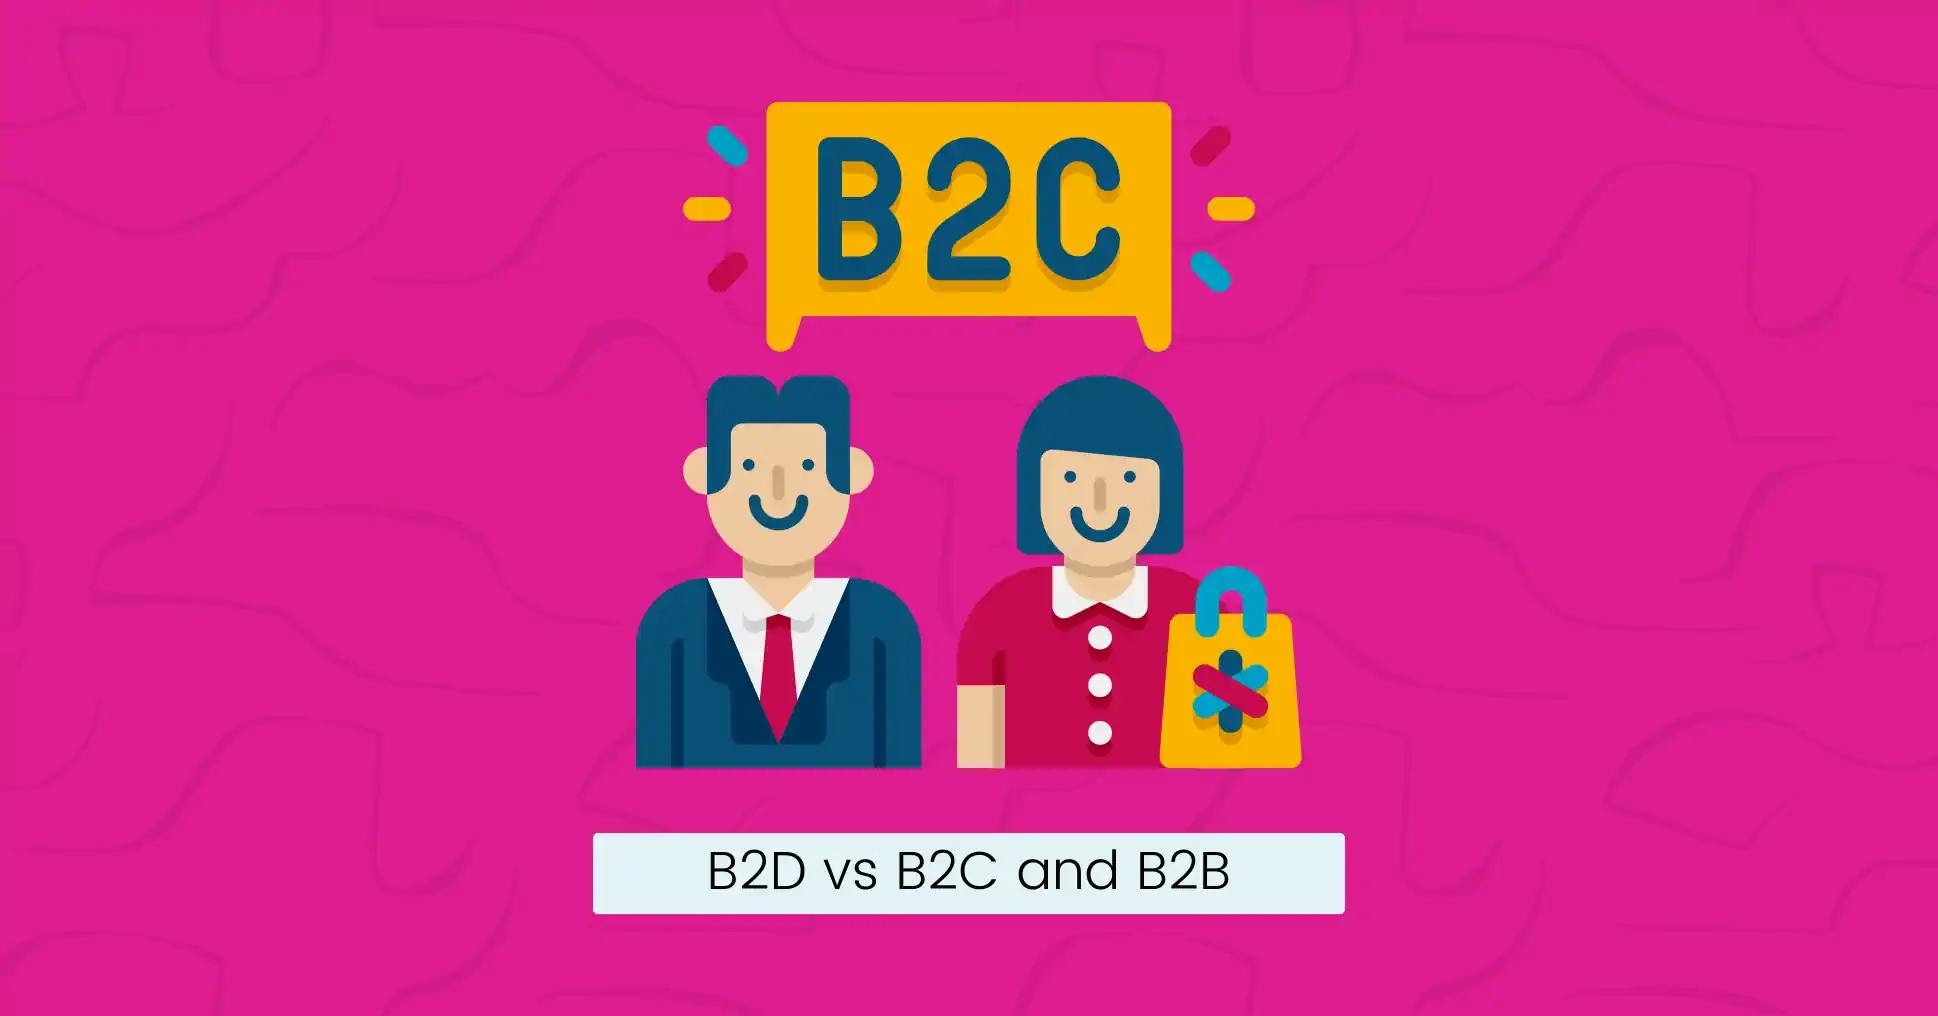 B2D marketing differs from B2C and B2B marketing